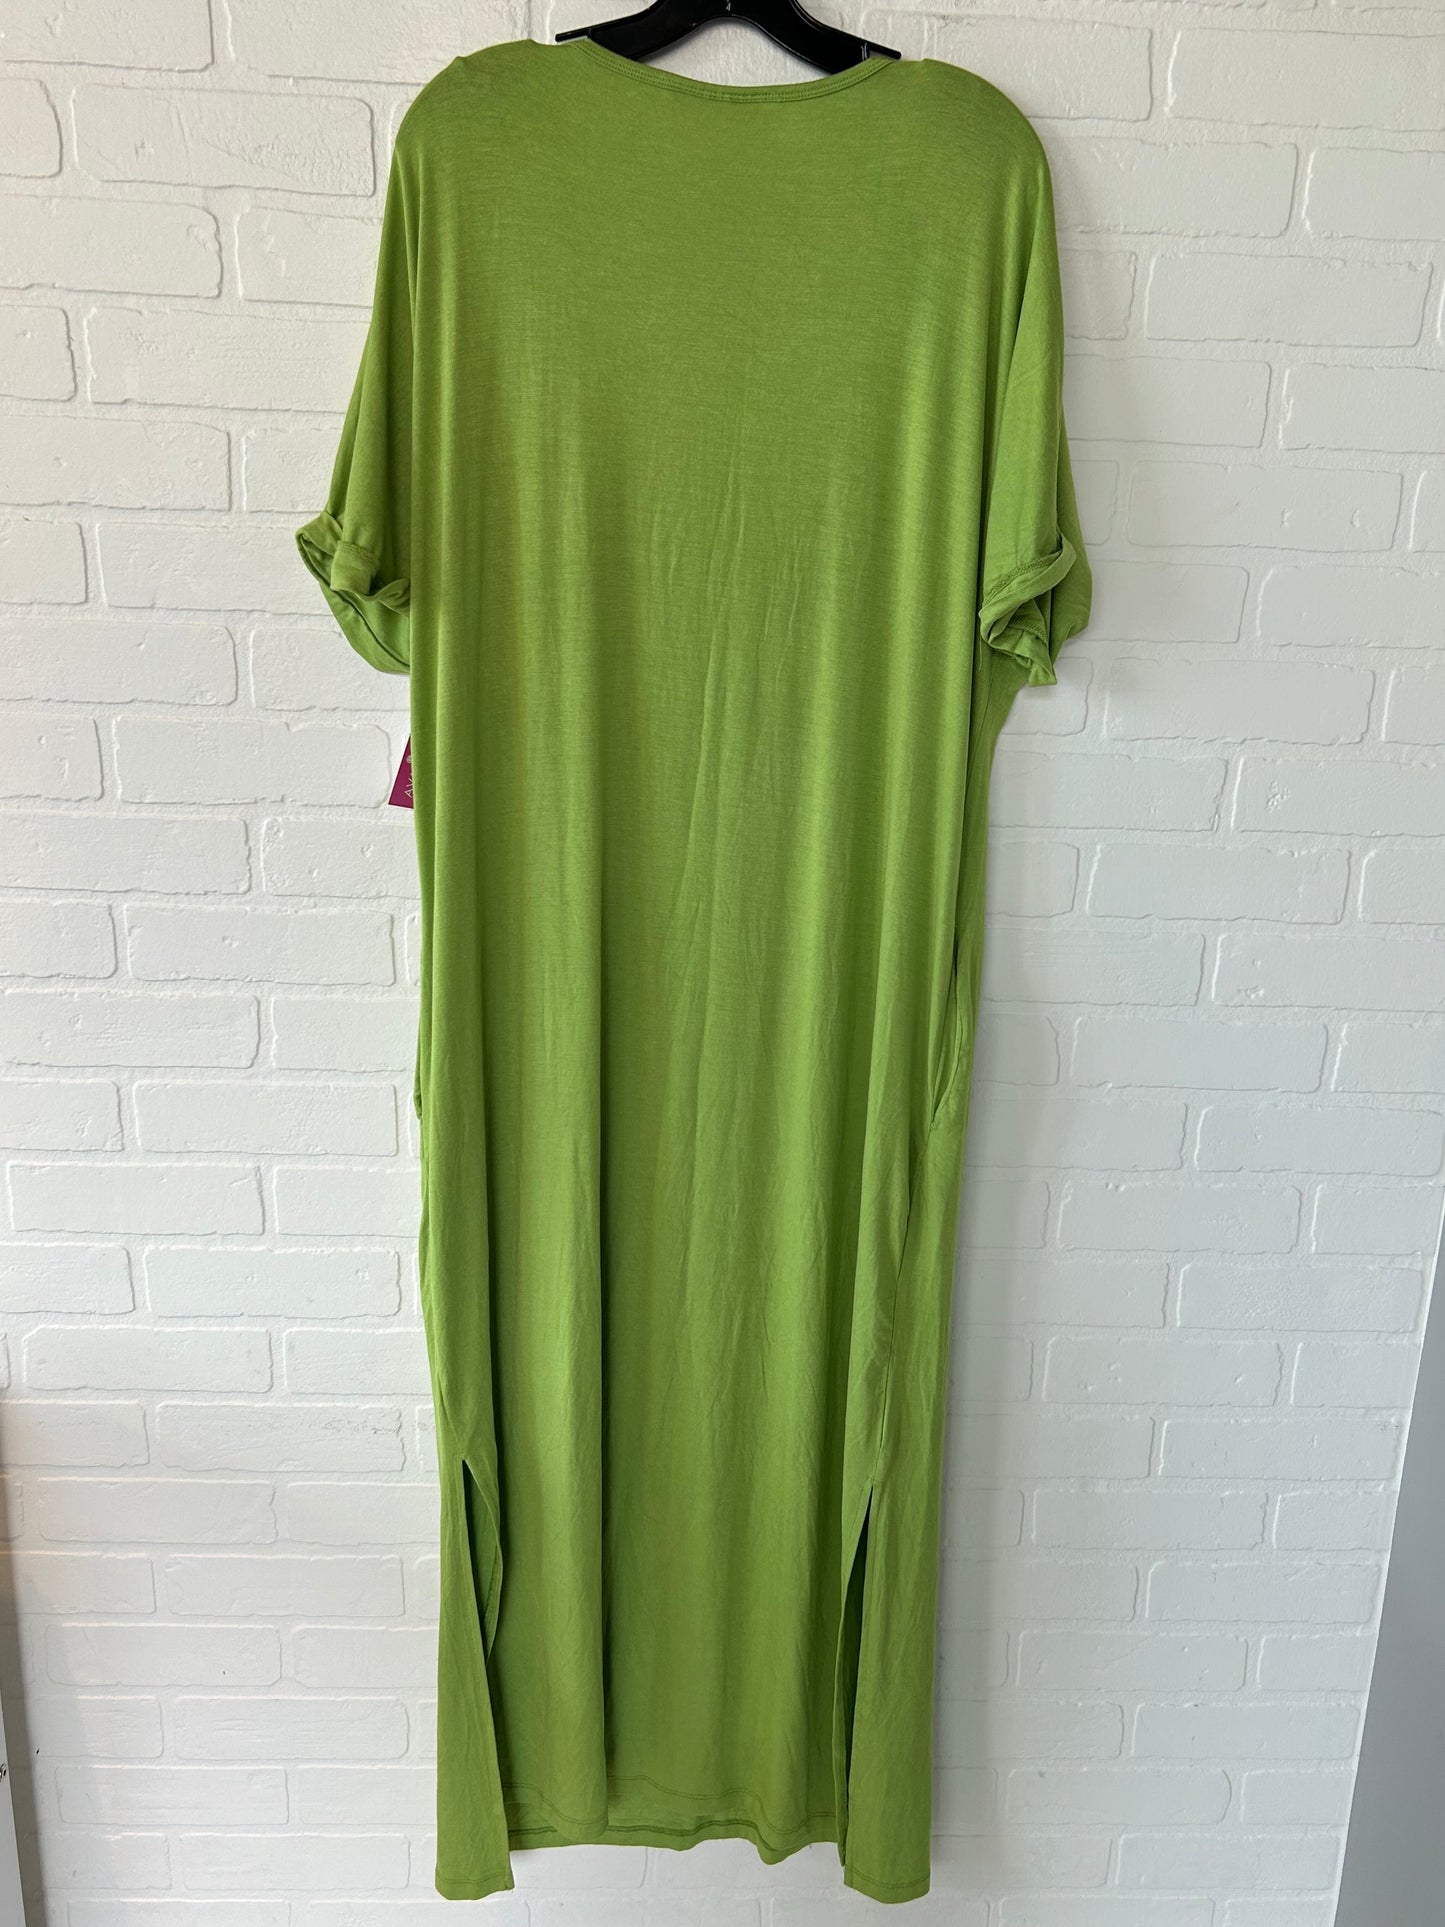 Green Dress Casual Maxi Ashley Stewart, Size 2x